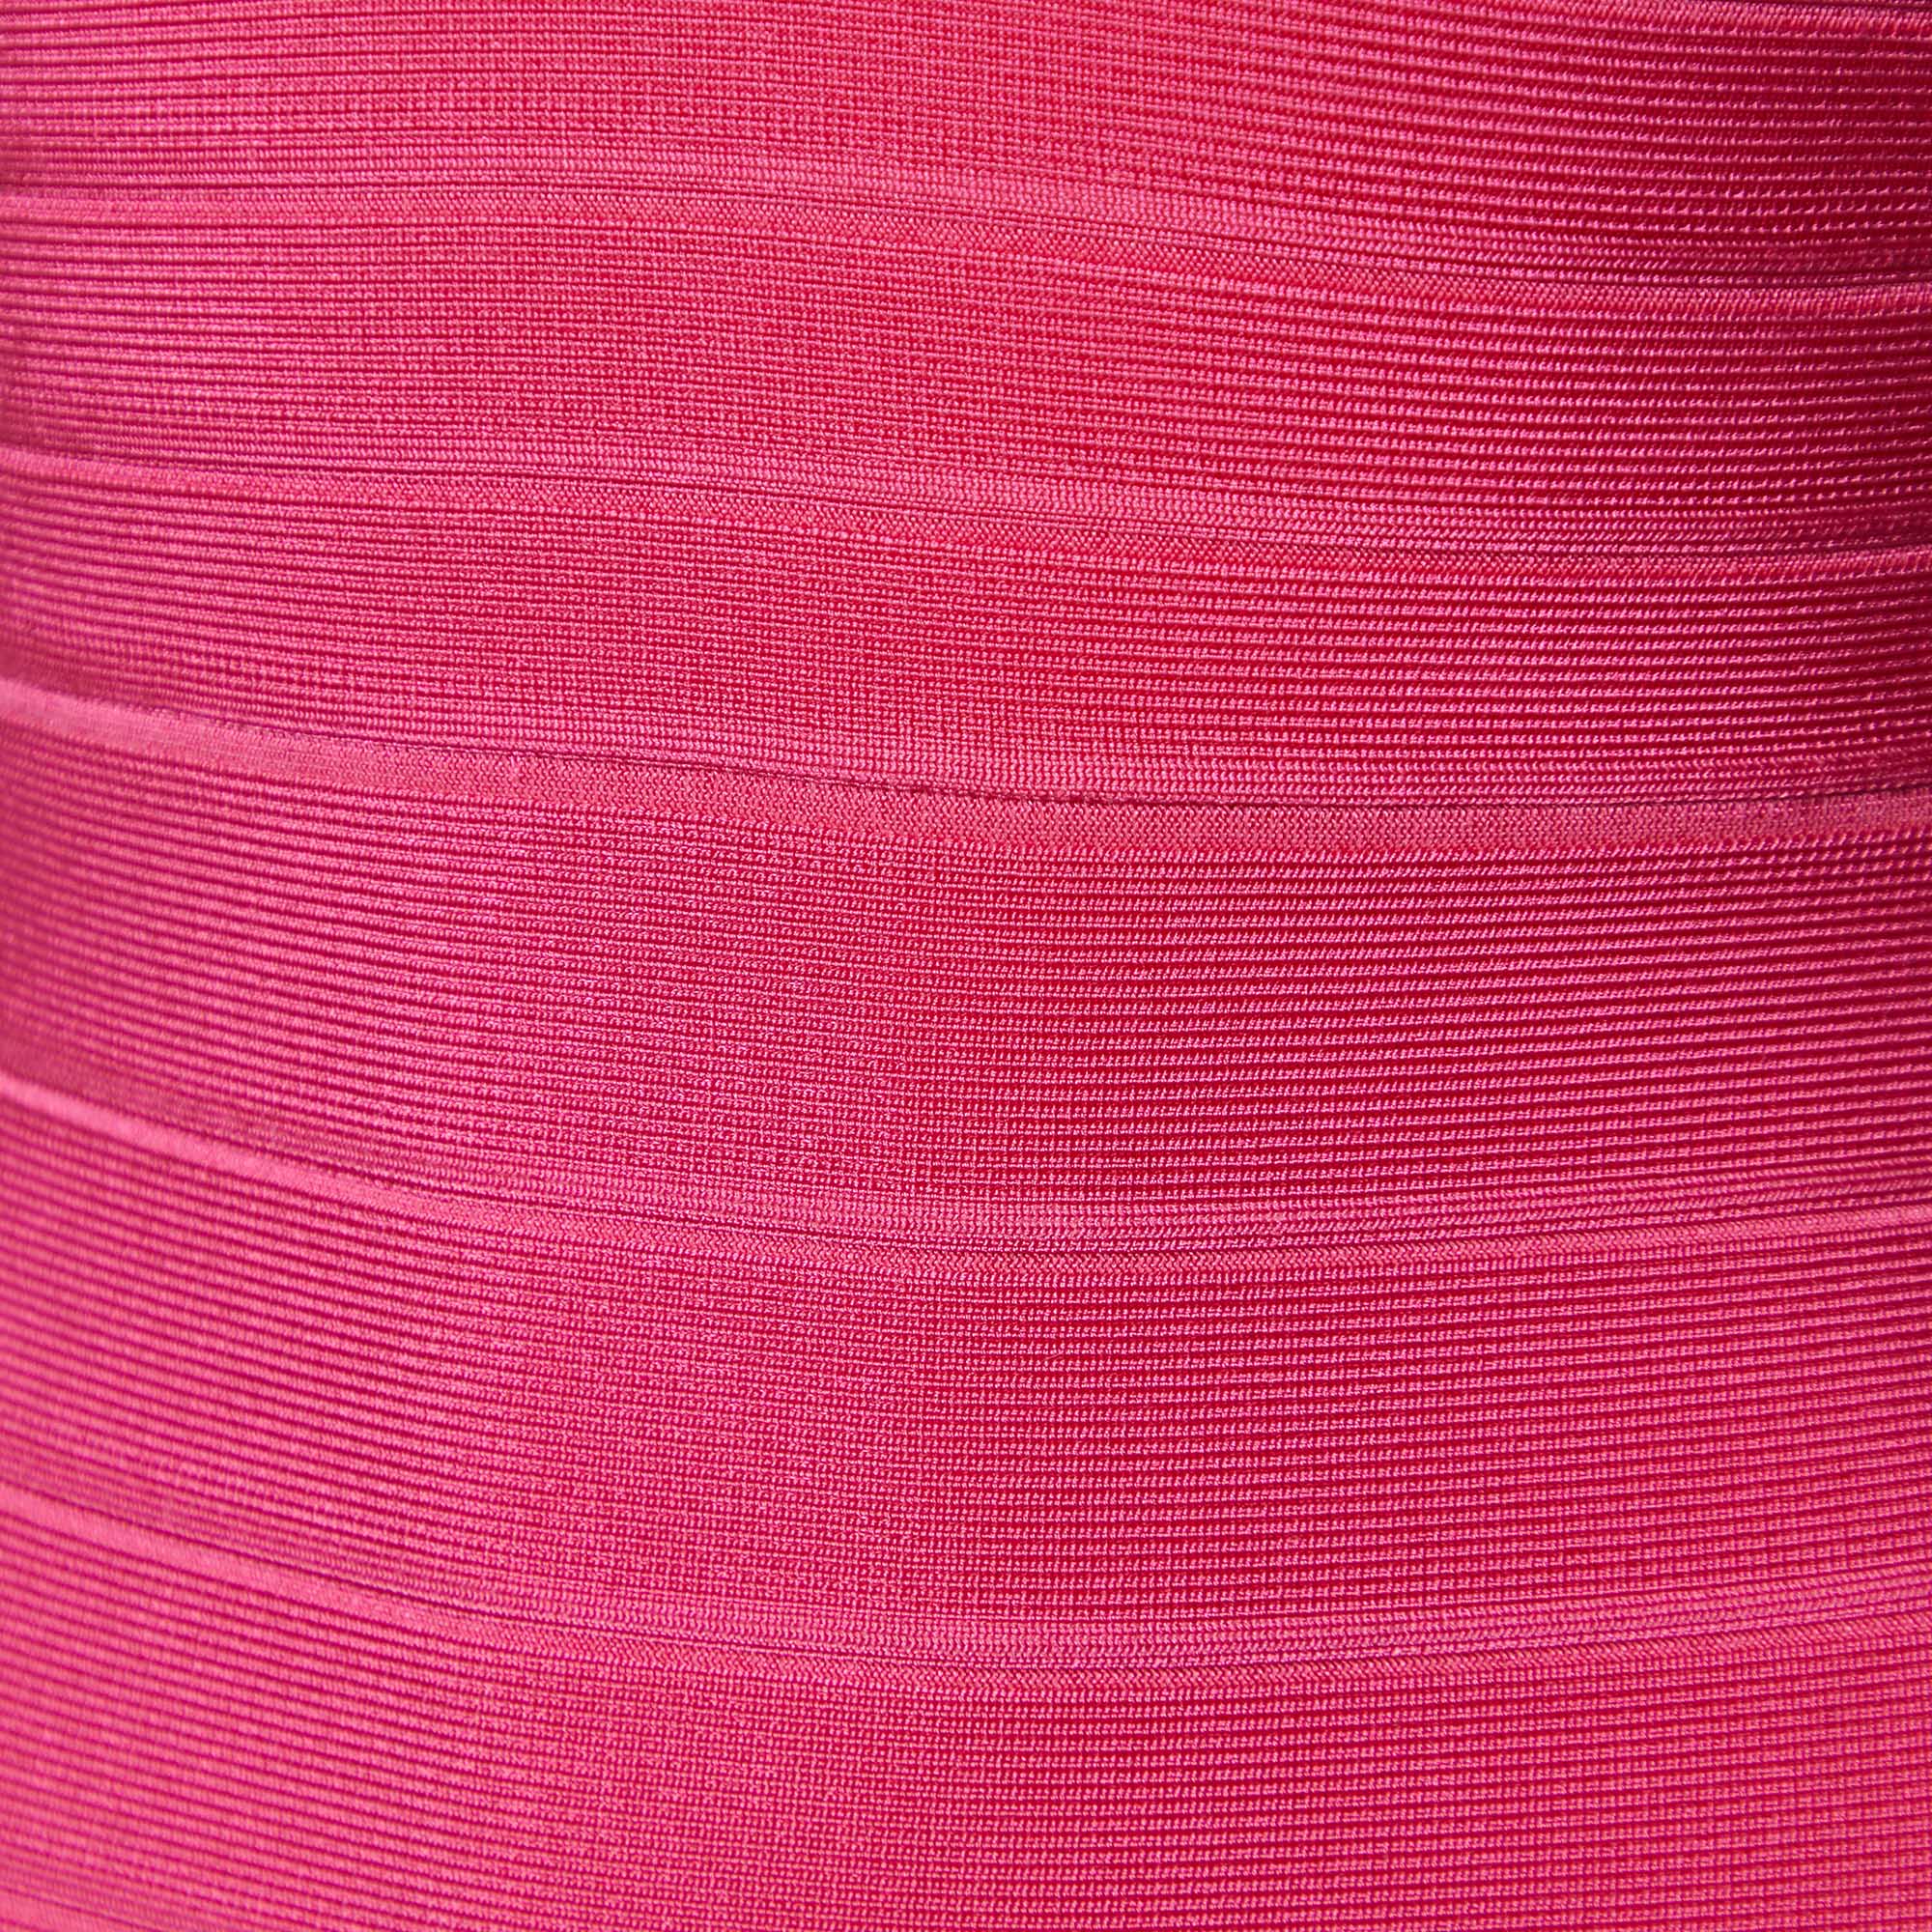 Herve Leger Pink Knit Mini Bandage Dress XXS